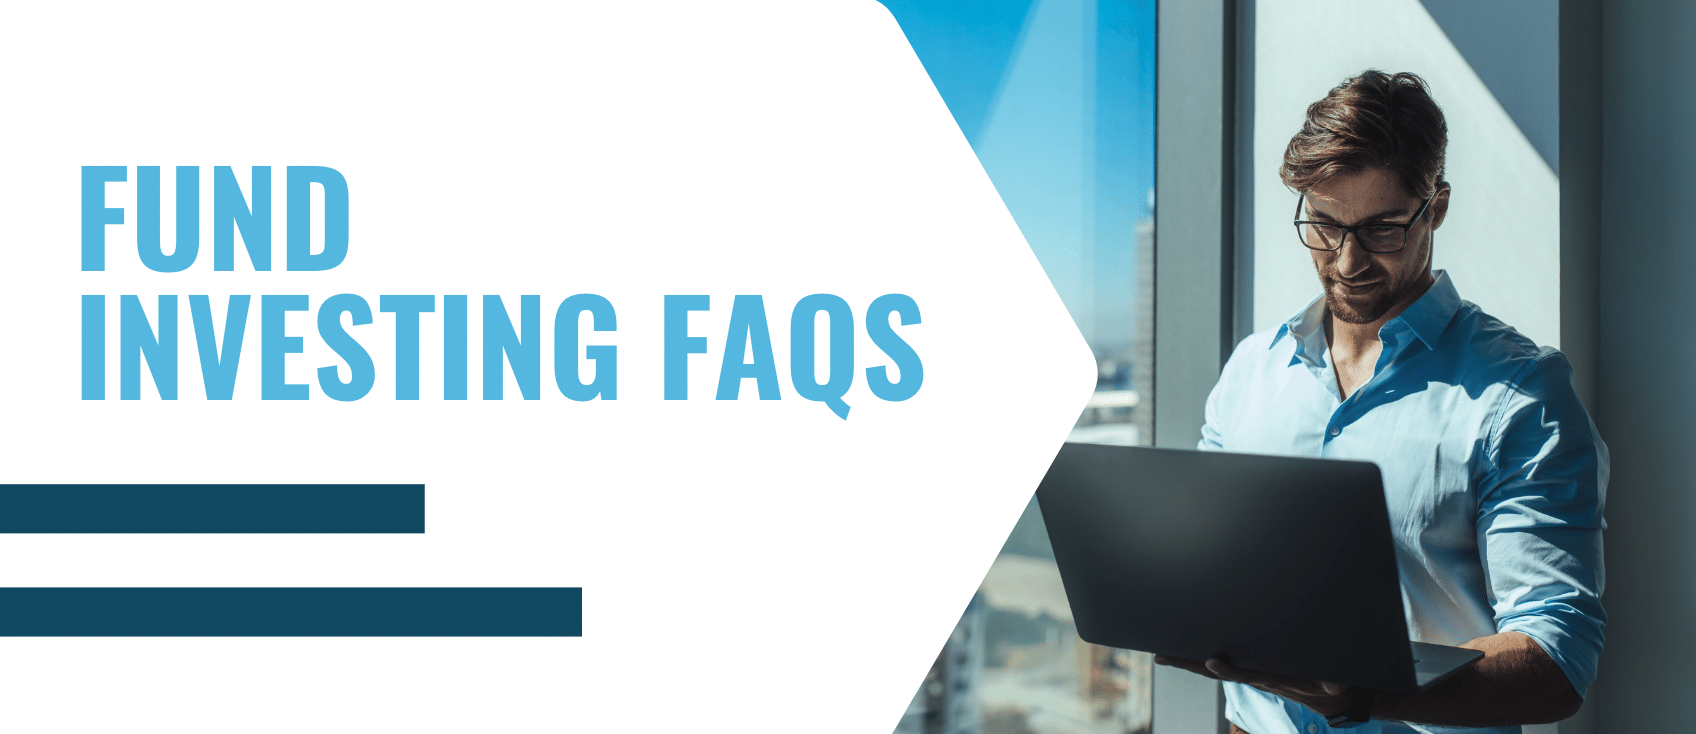 Fund Investing FAQ's